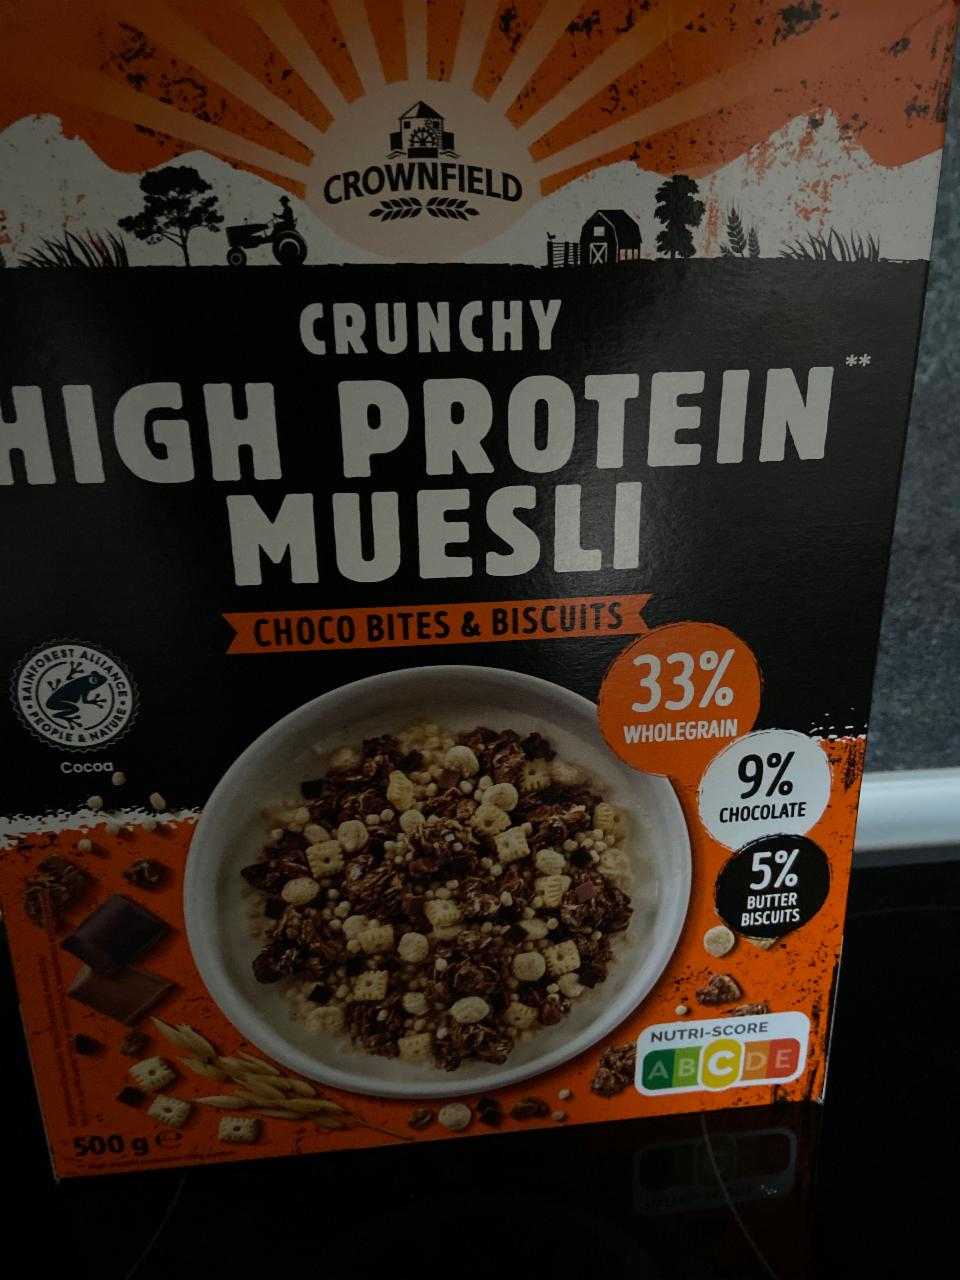 Фото - Crunchy high protein muesli Crownfield